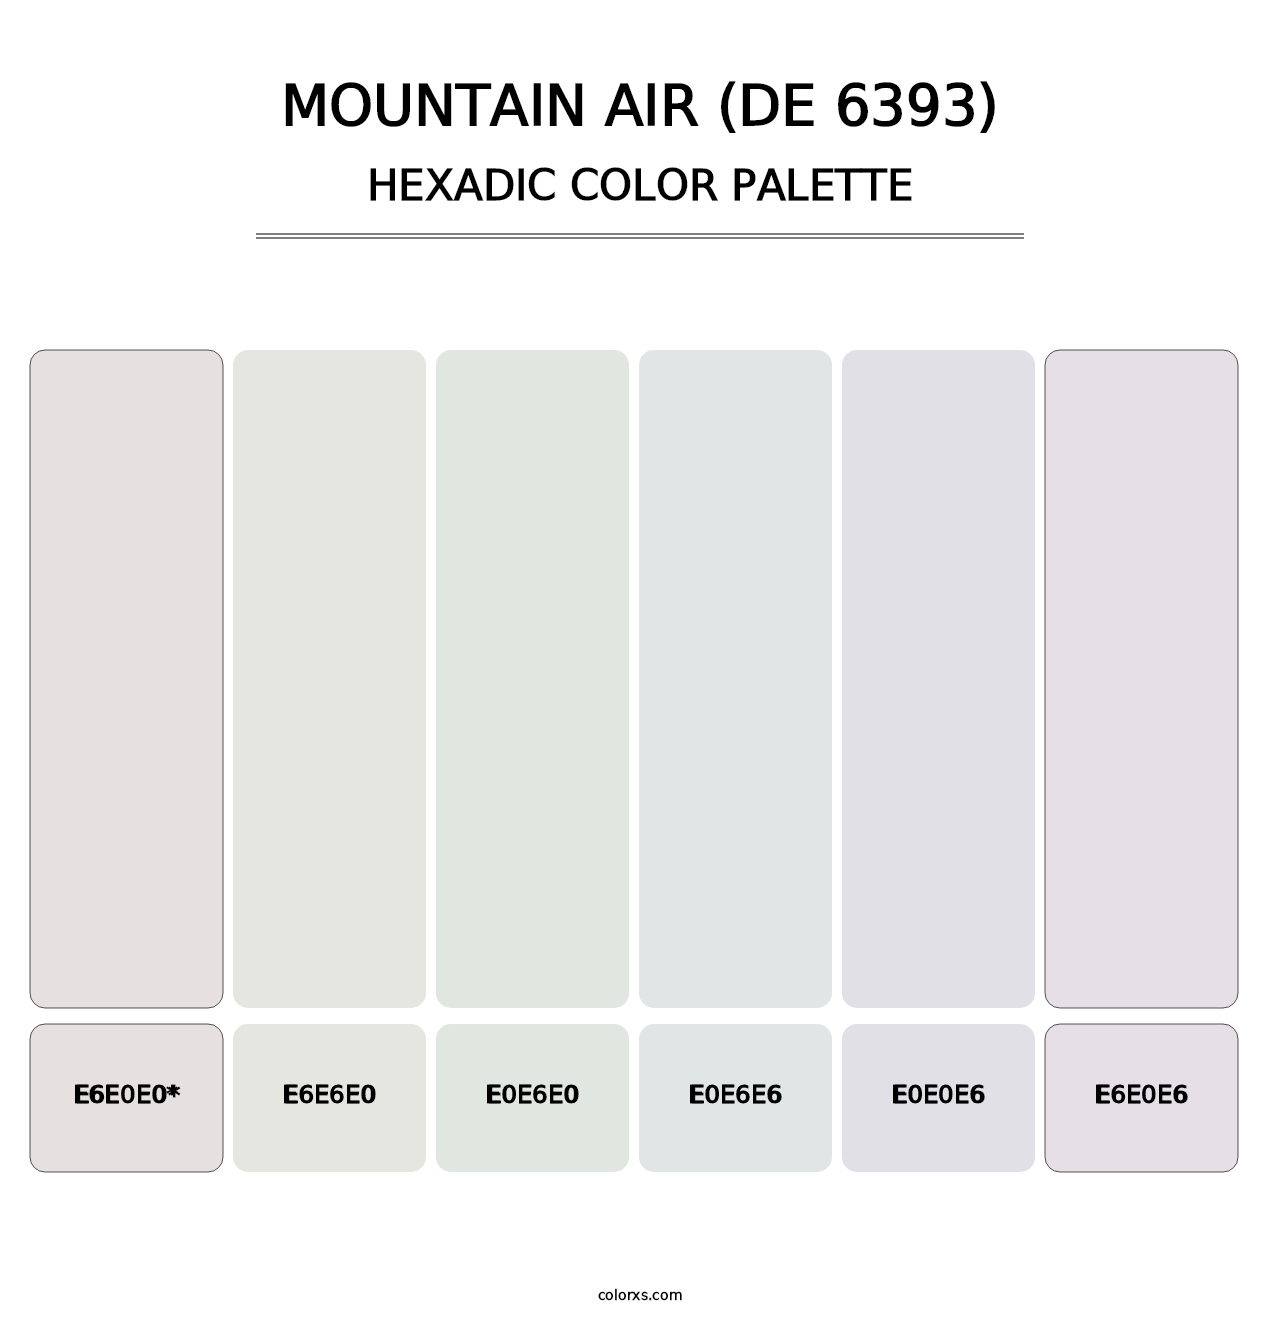 Mountain Air (DE 6393) - Hexadic Color Palette